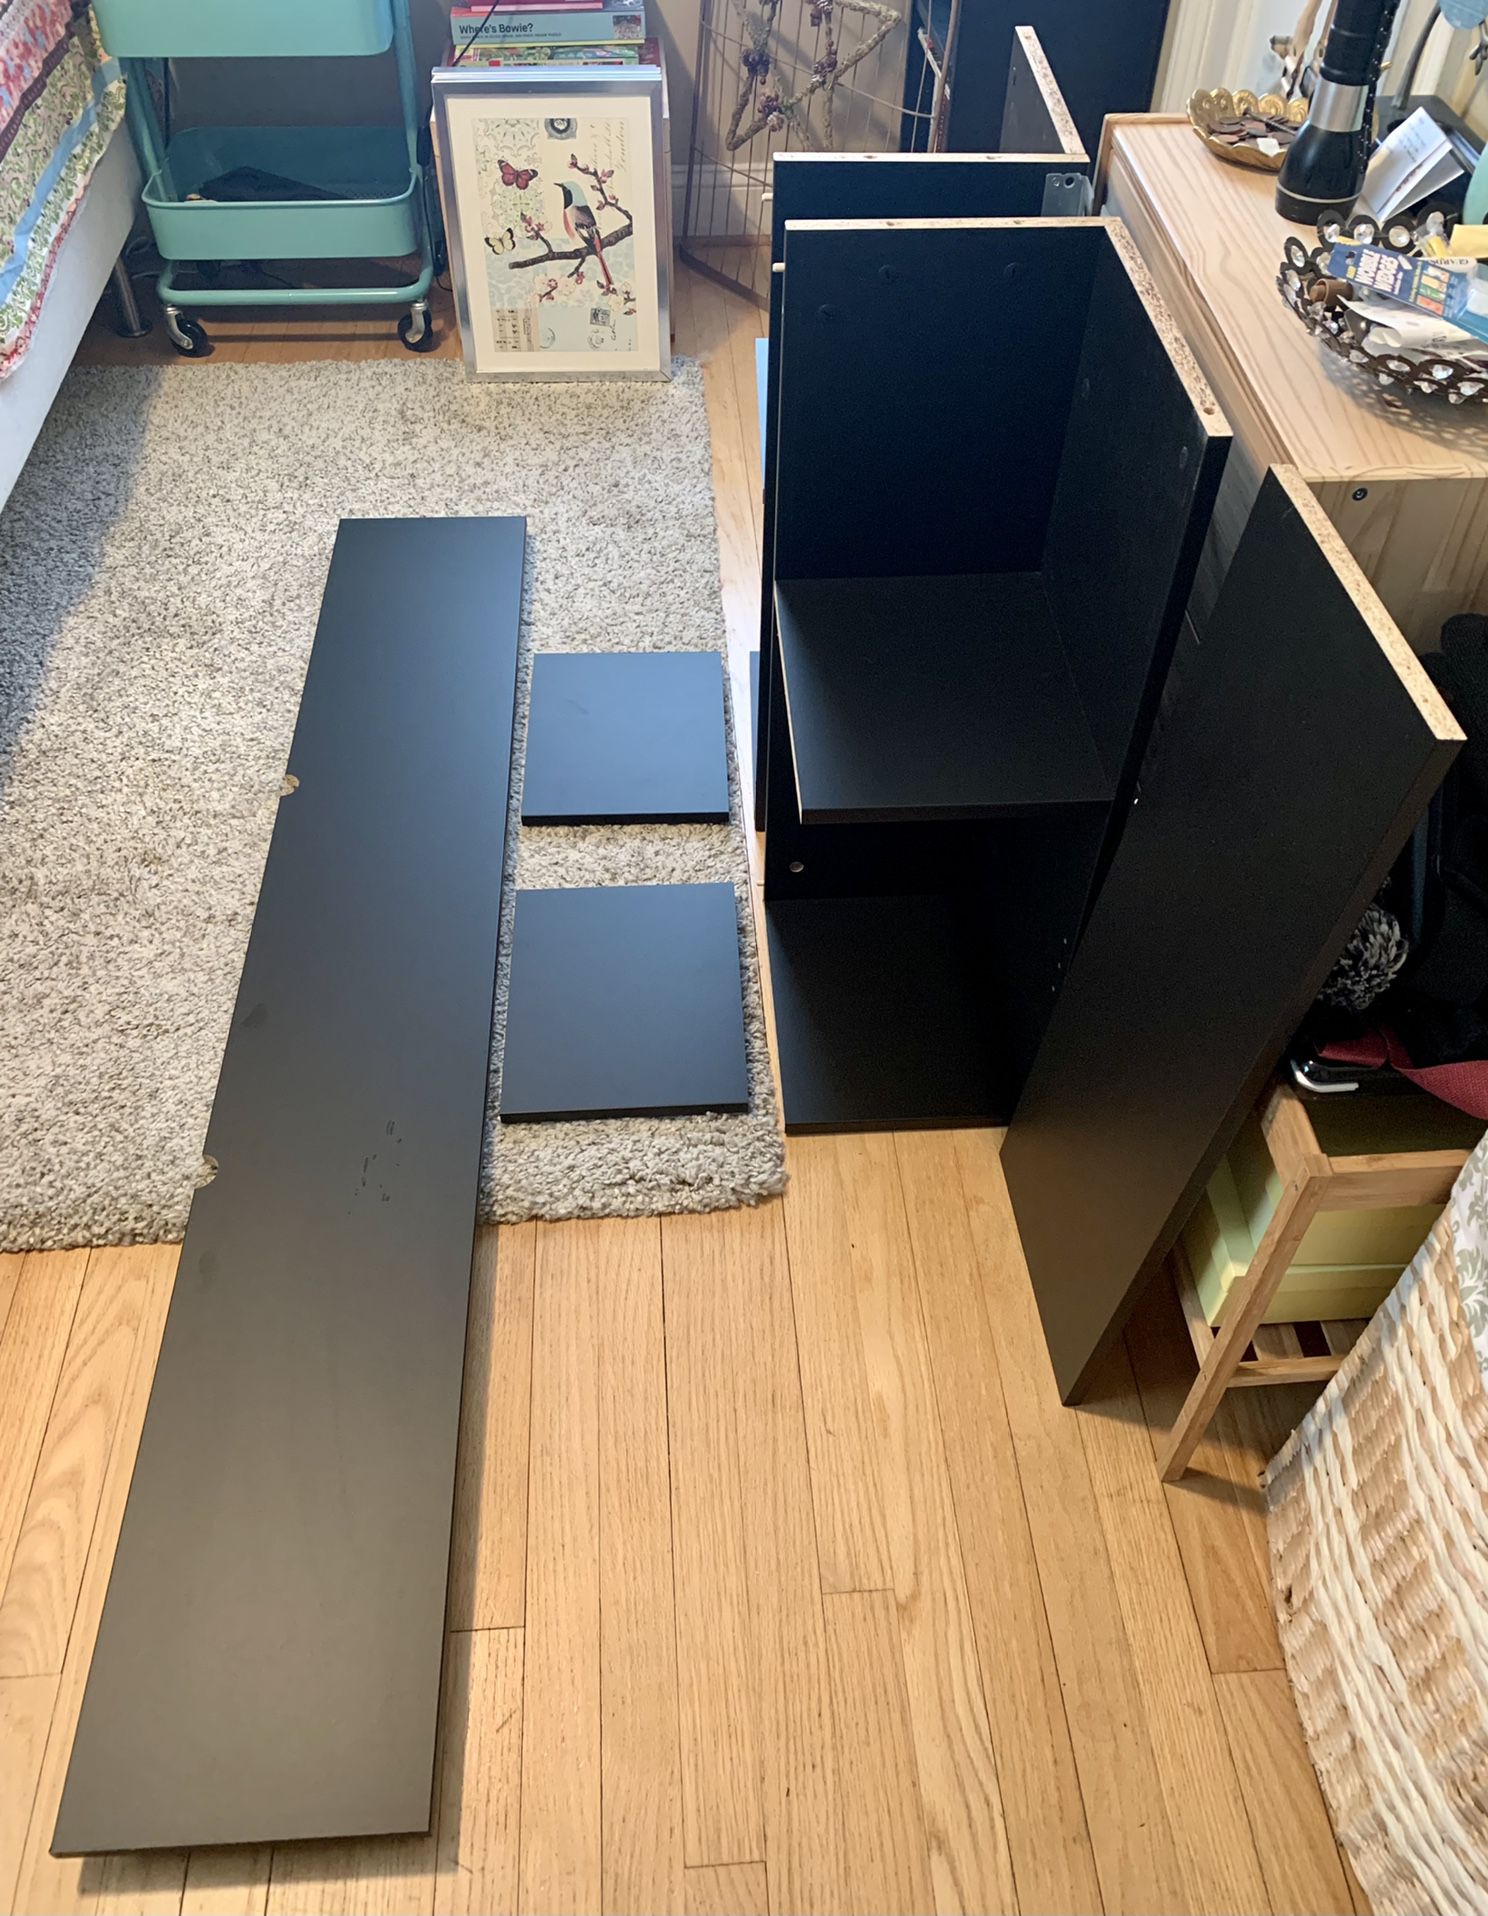 IKEA Queen Brimnes Headboard With Storage Compartments